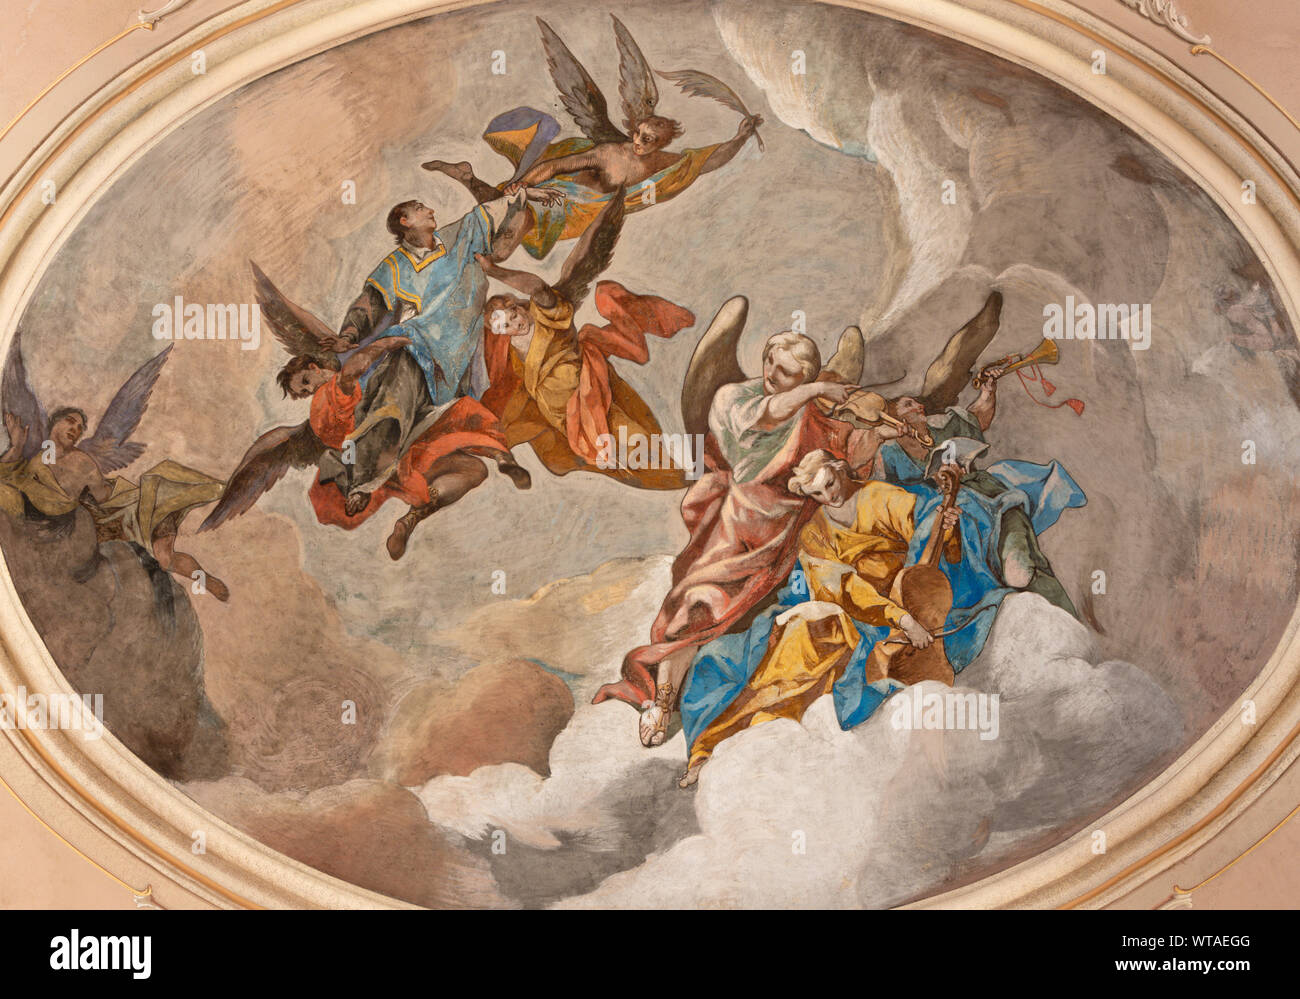 MALCESINE, ITALY - JUNE 13, 2019: The ceiling fresco of Apotheosis of St. Stephen in church Chiesa di Santo Stefano by Odoardo Perini (1750). Stock Photo